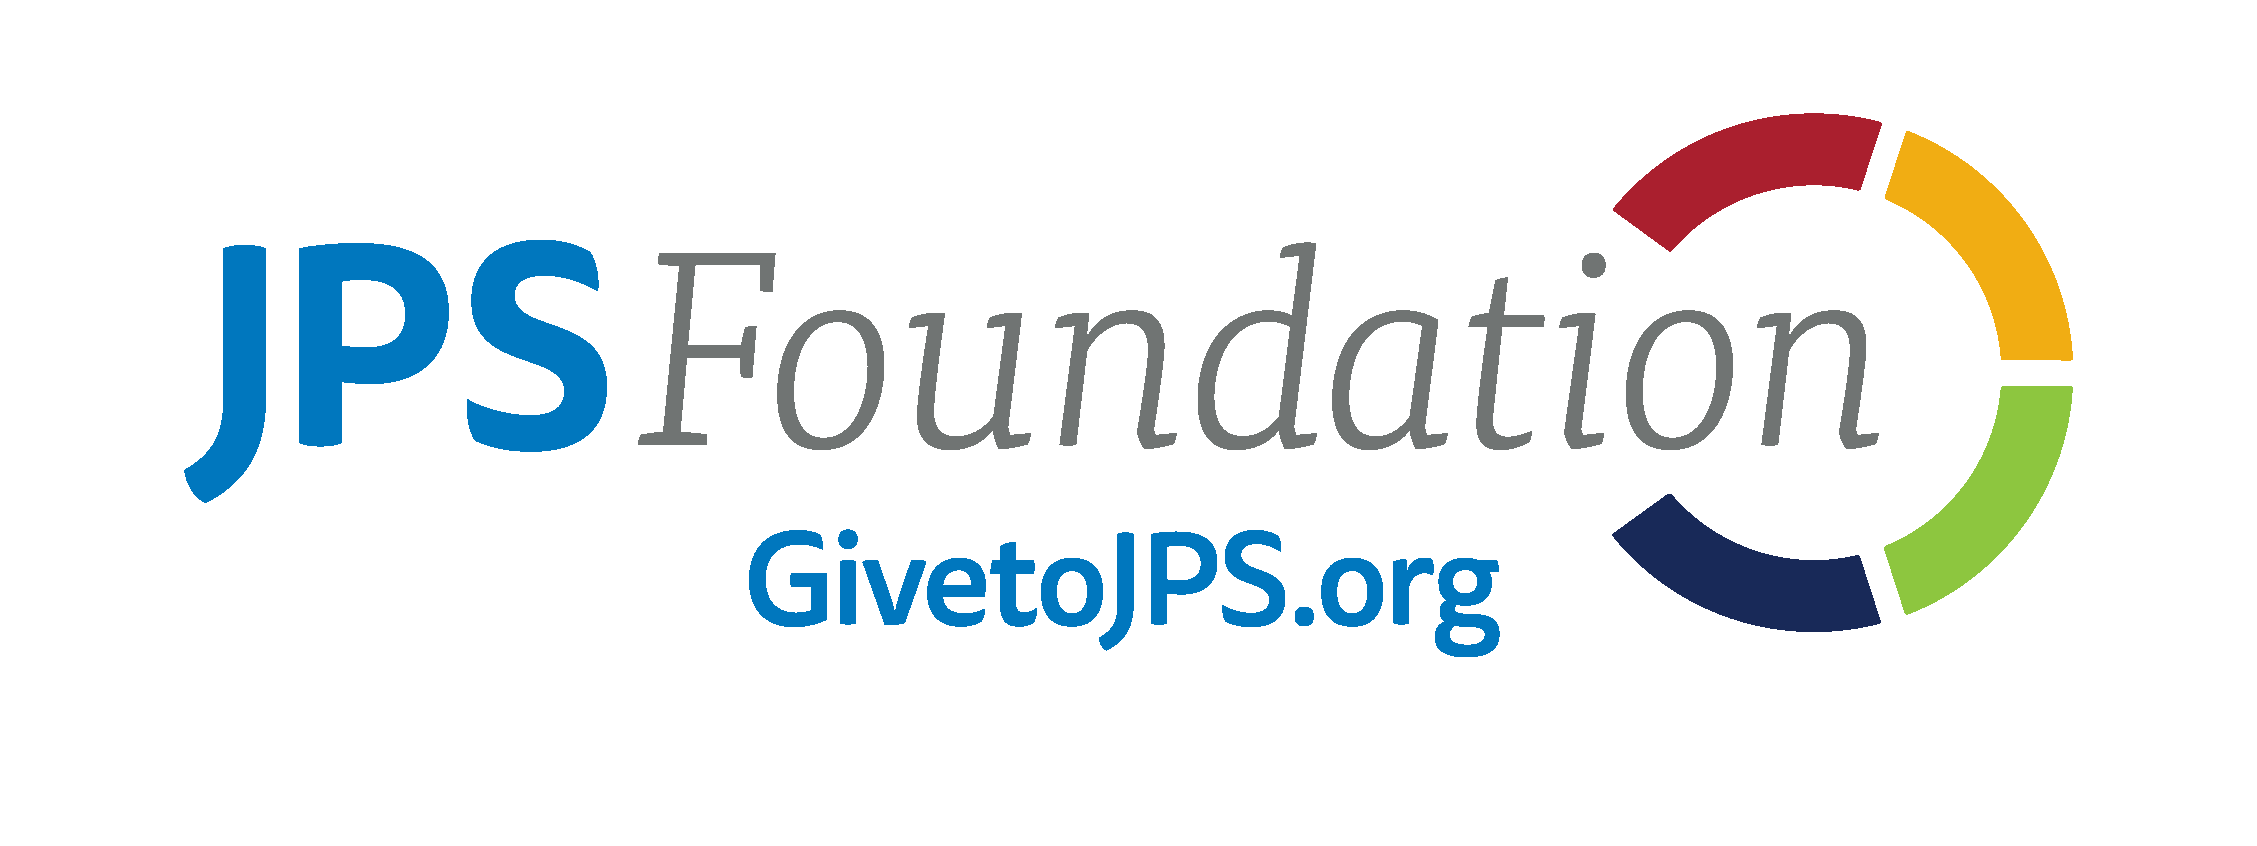 Jpsfoundation logo